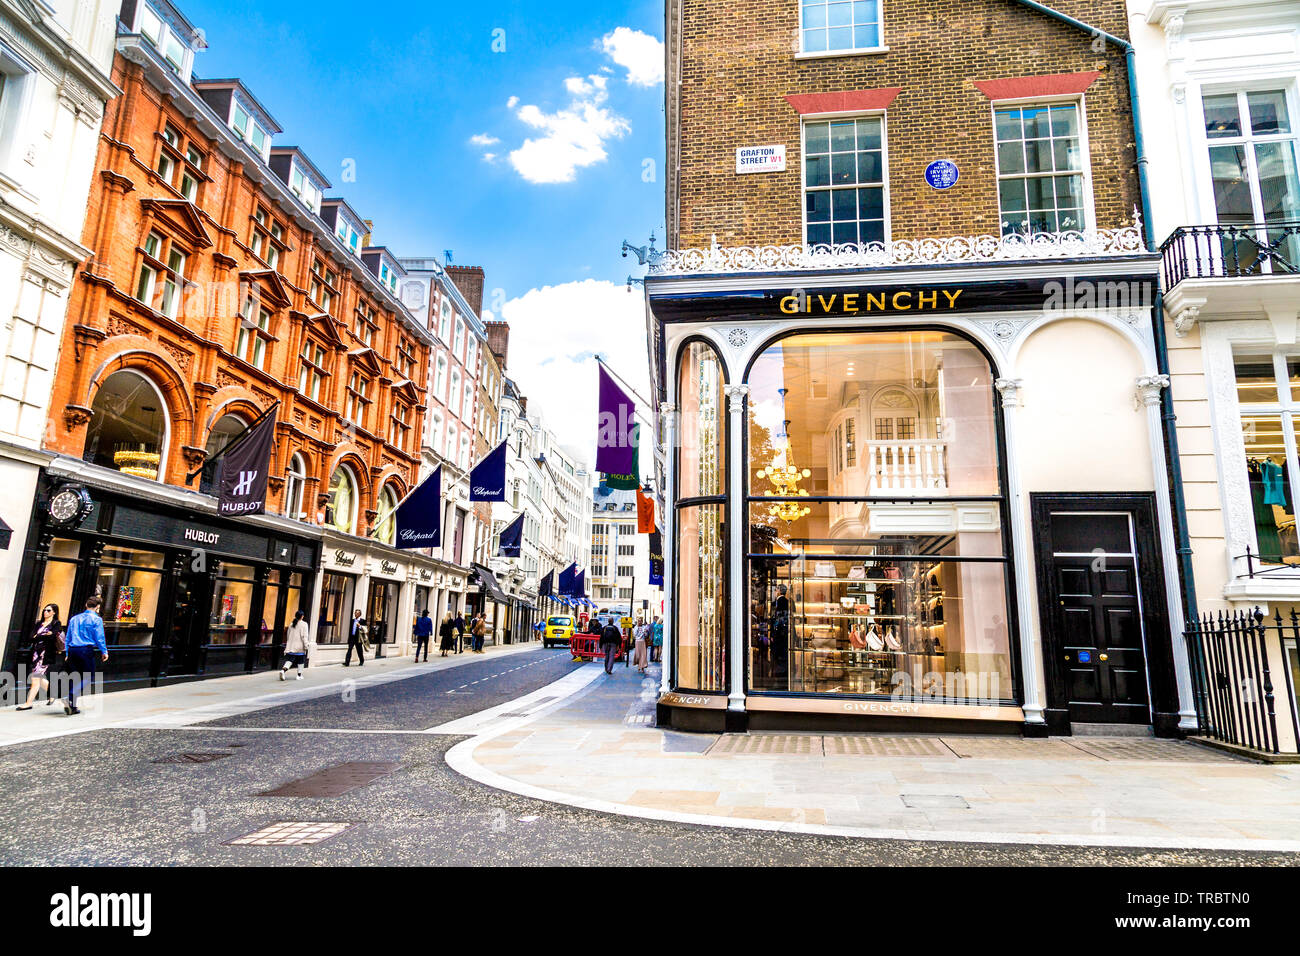 givenchy london bond street